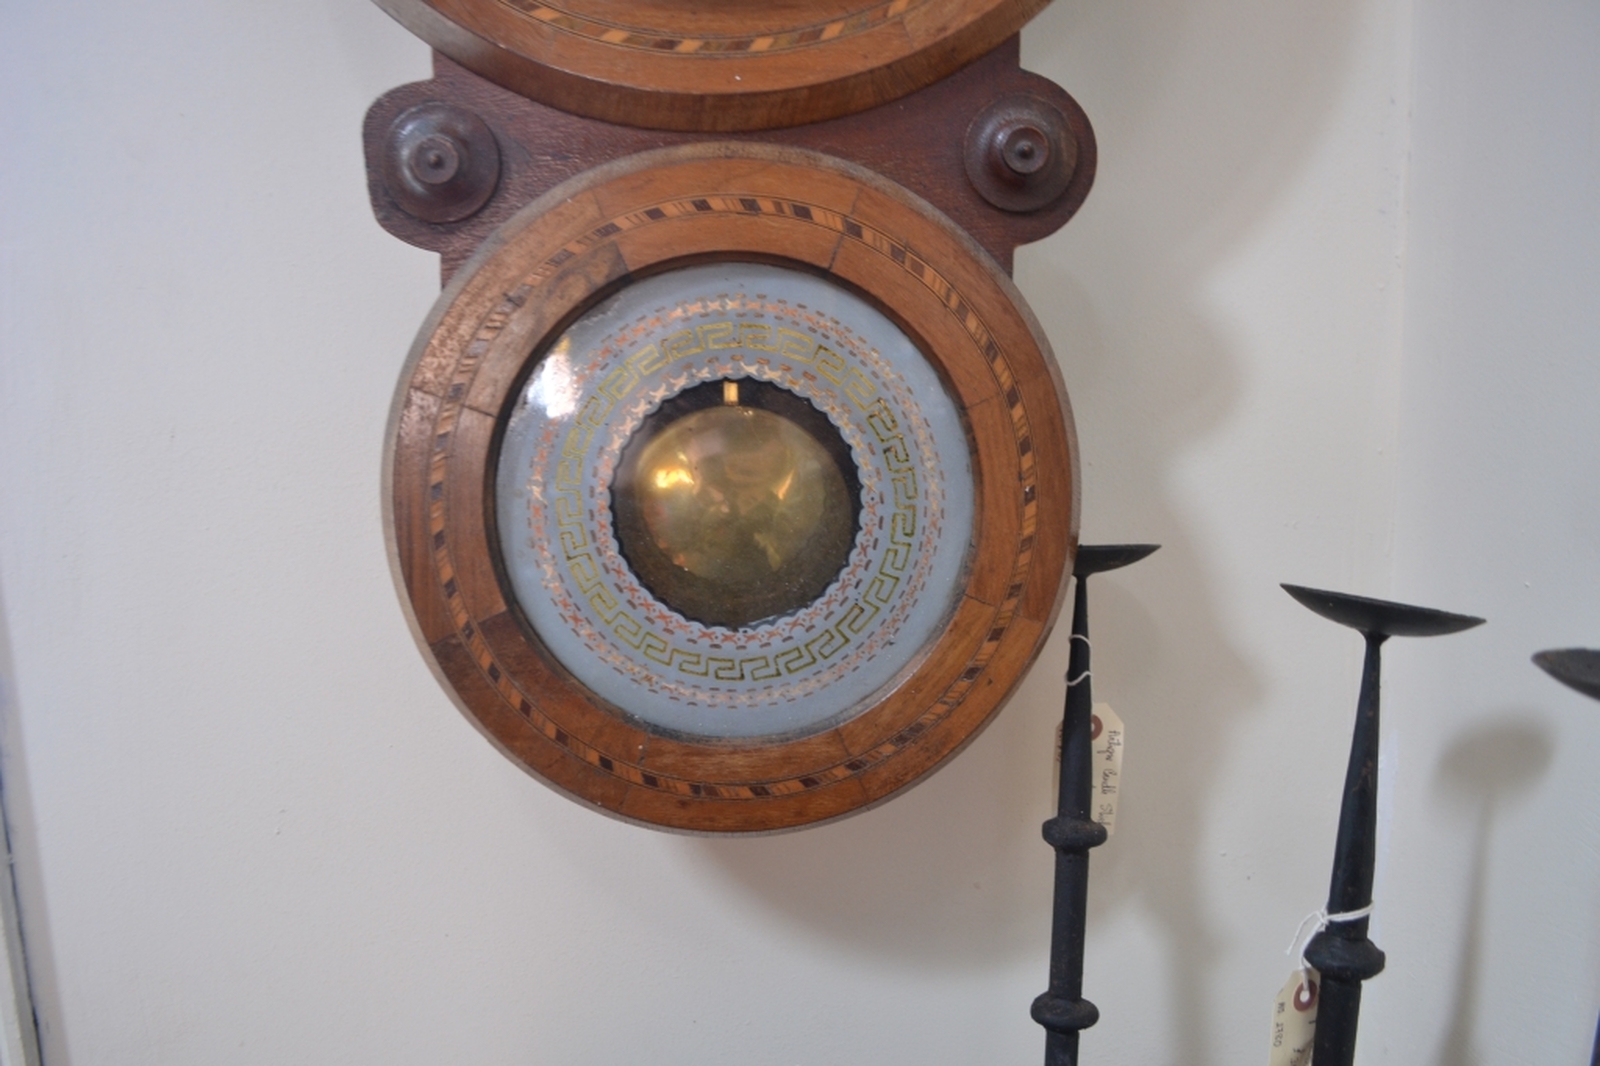 Unusual American Inlaid Walnut Wall Clock